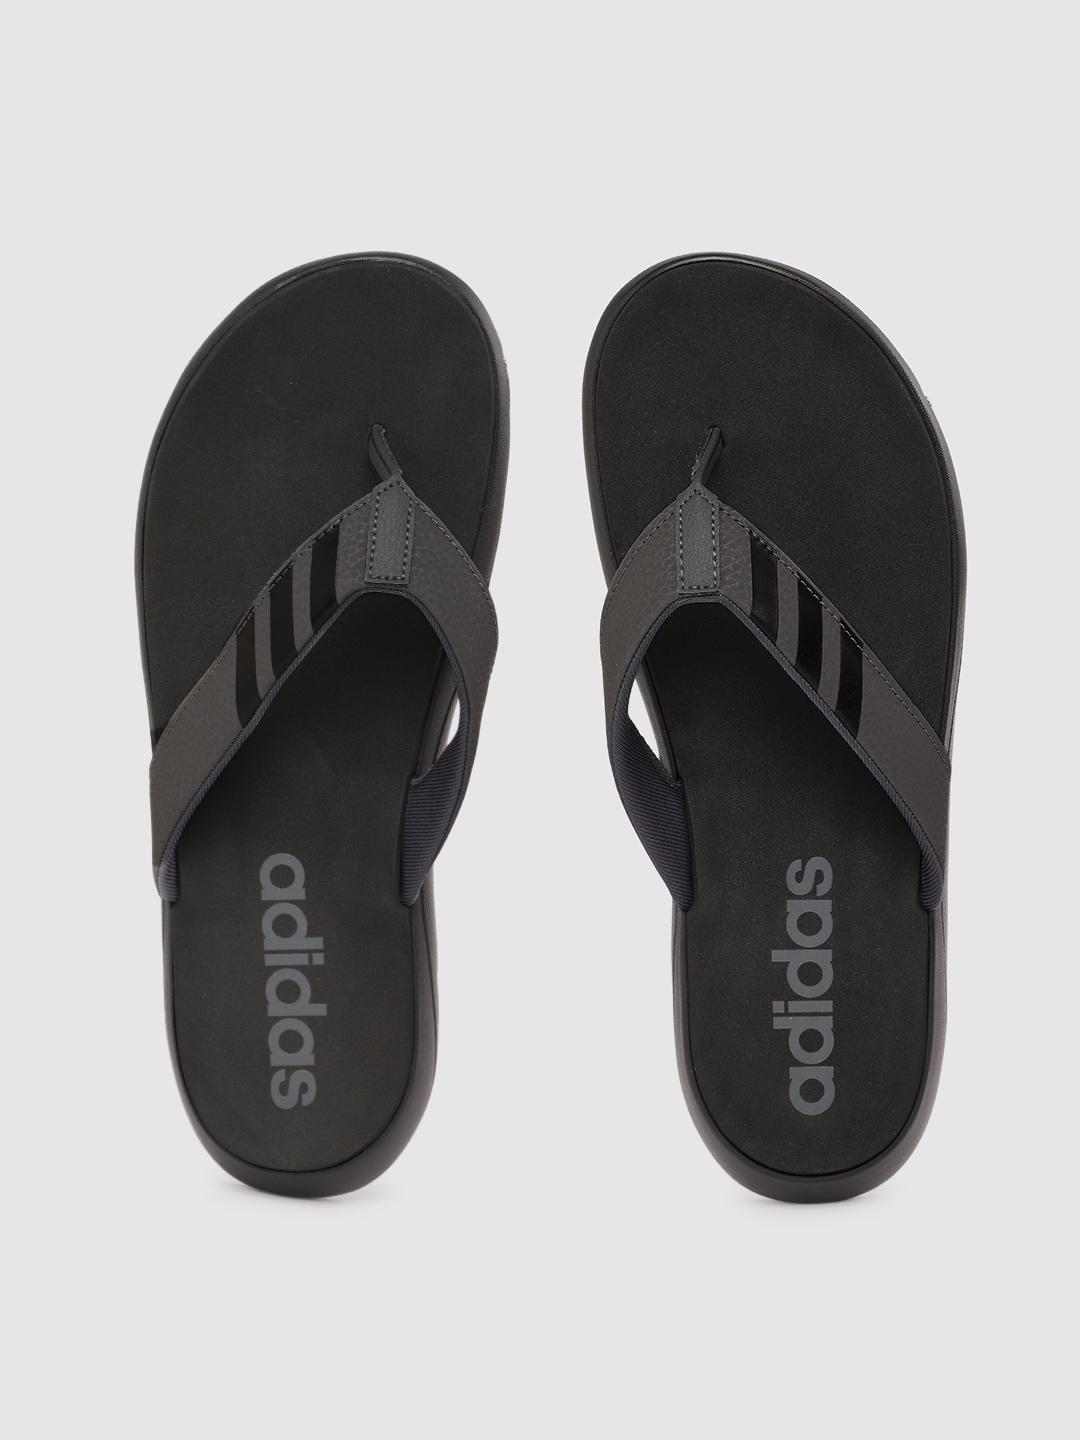 adidas-men-charcoal-grey-&-black-striped-thong-flip-flops